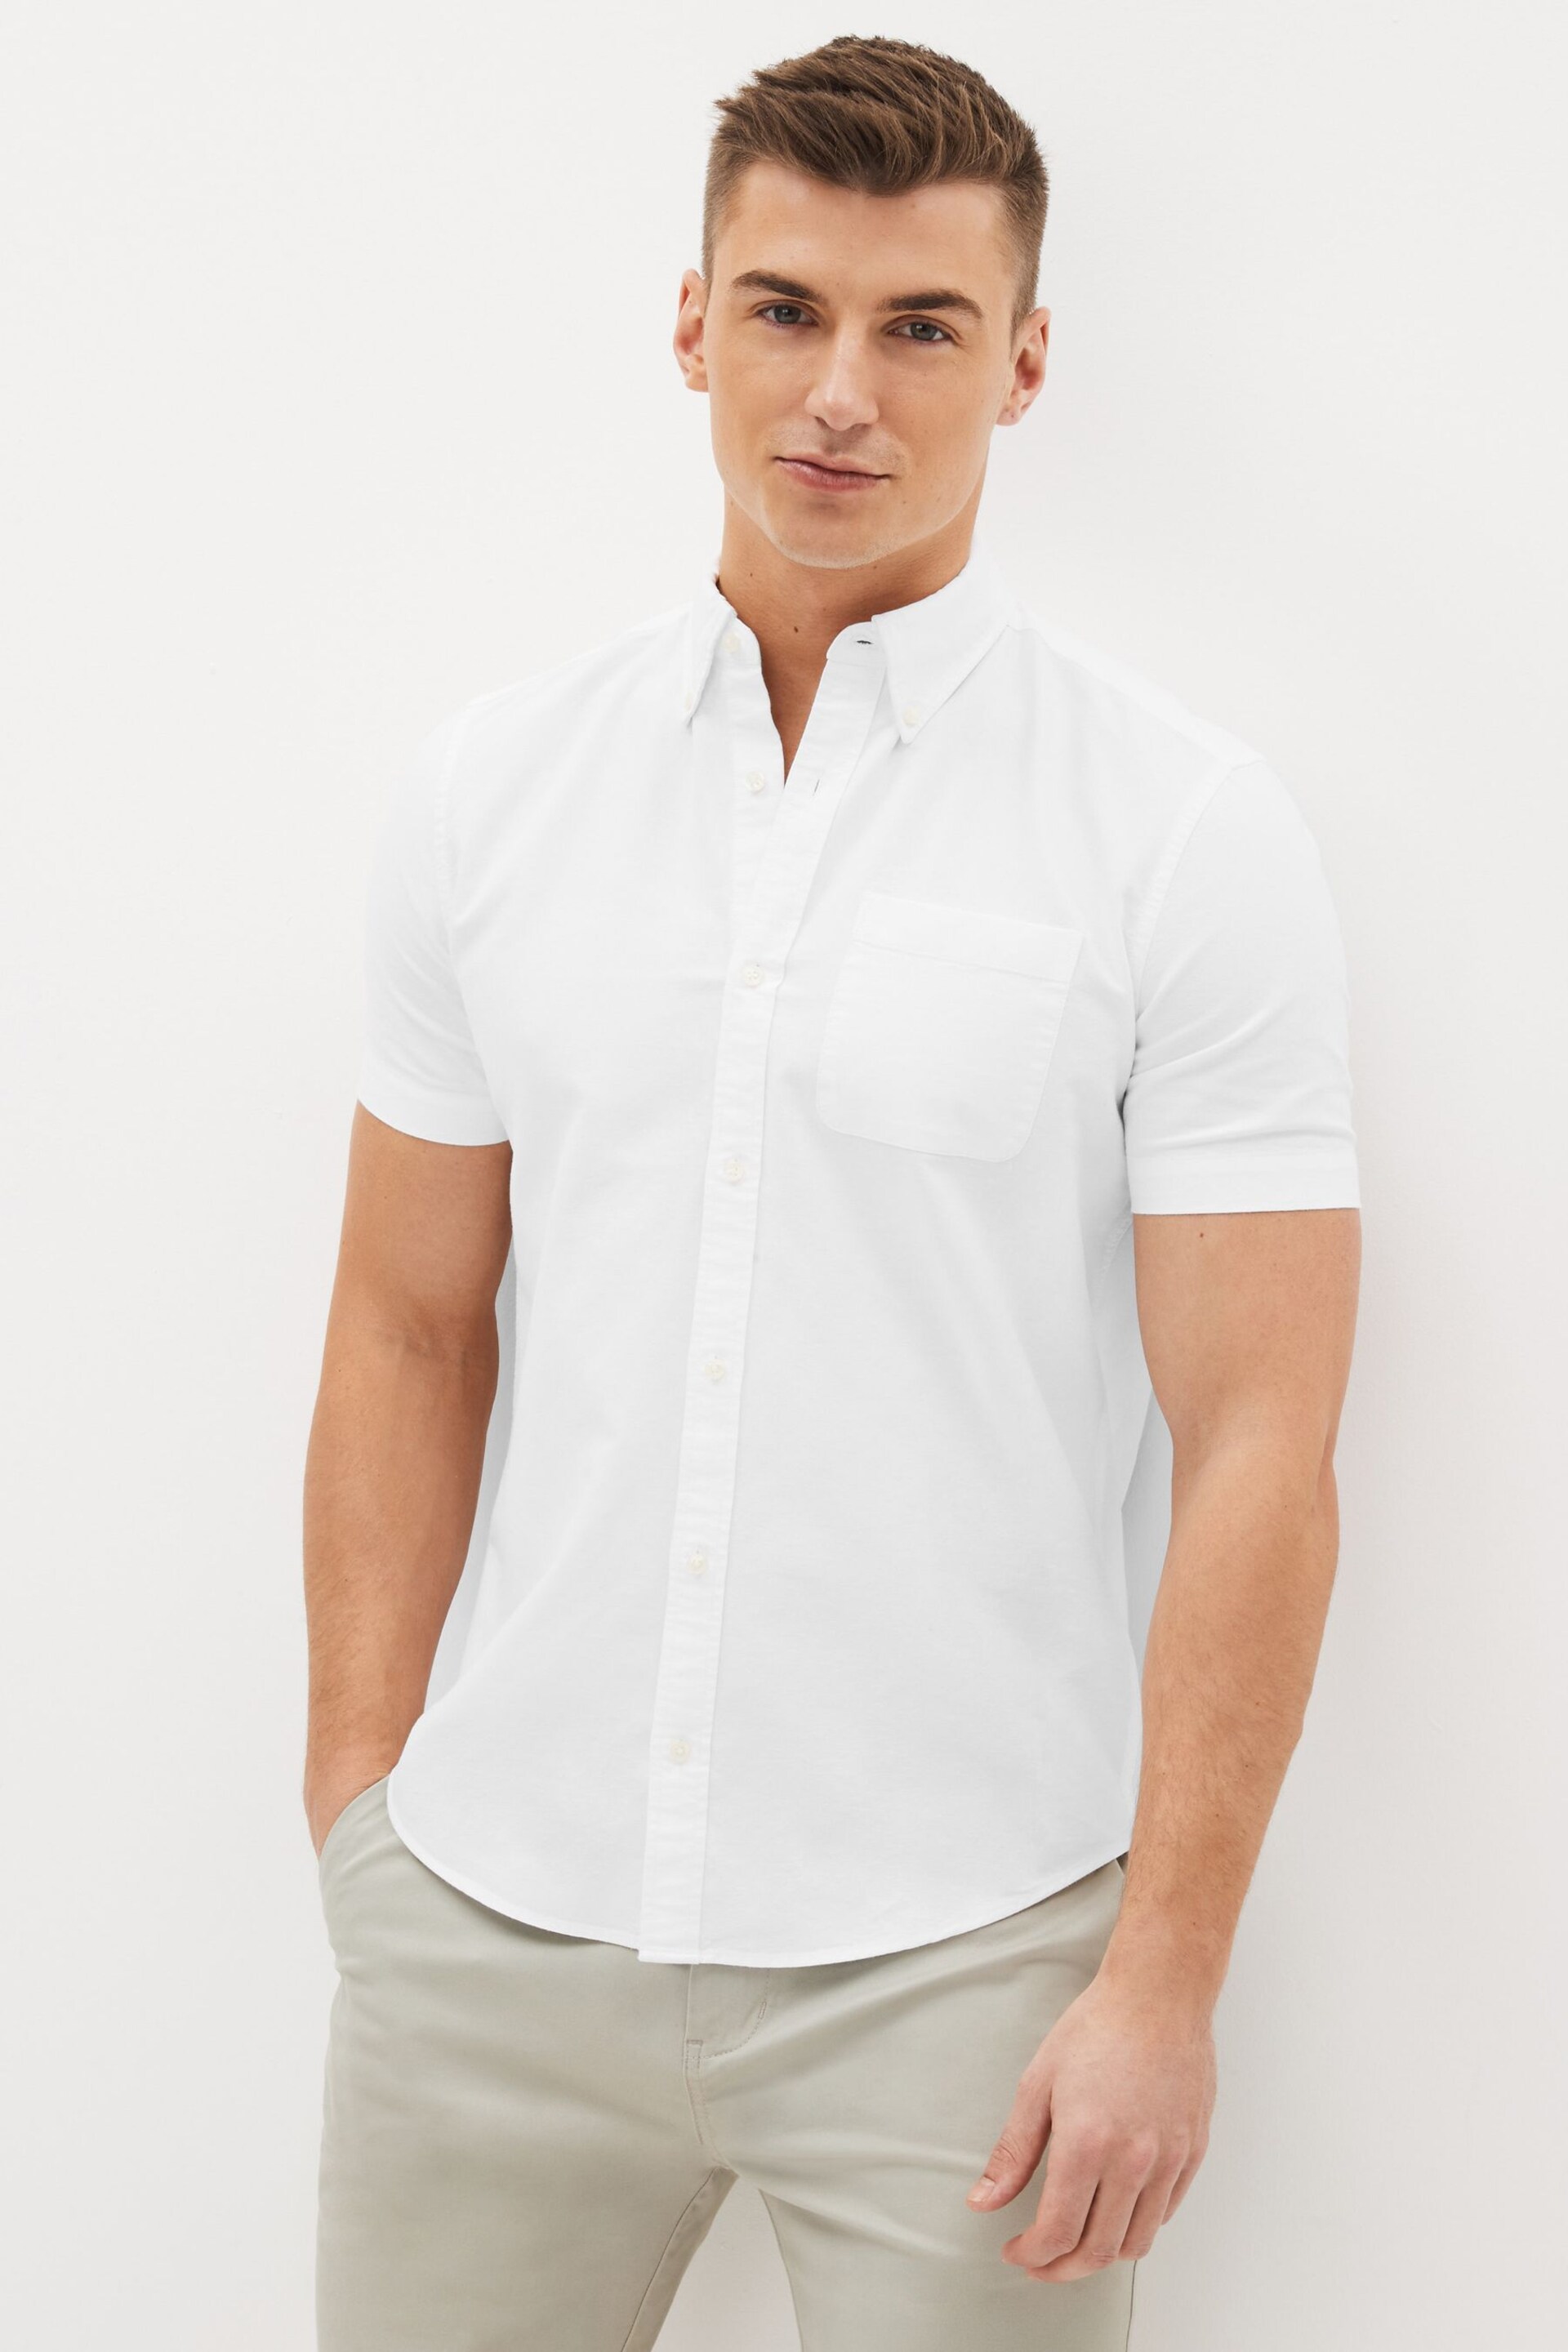 White/Navy/Gingham Short Sleeve Oxford Shirt 3 Pack - Image 4 of 7